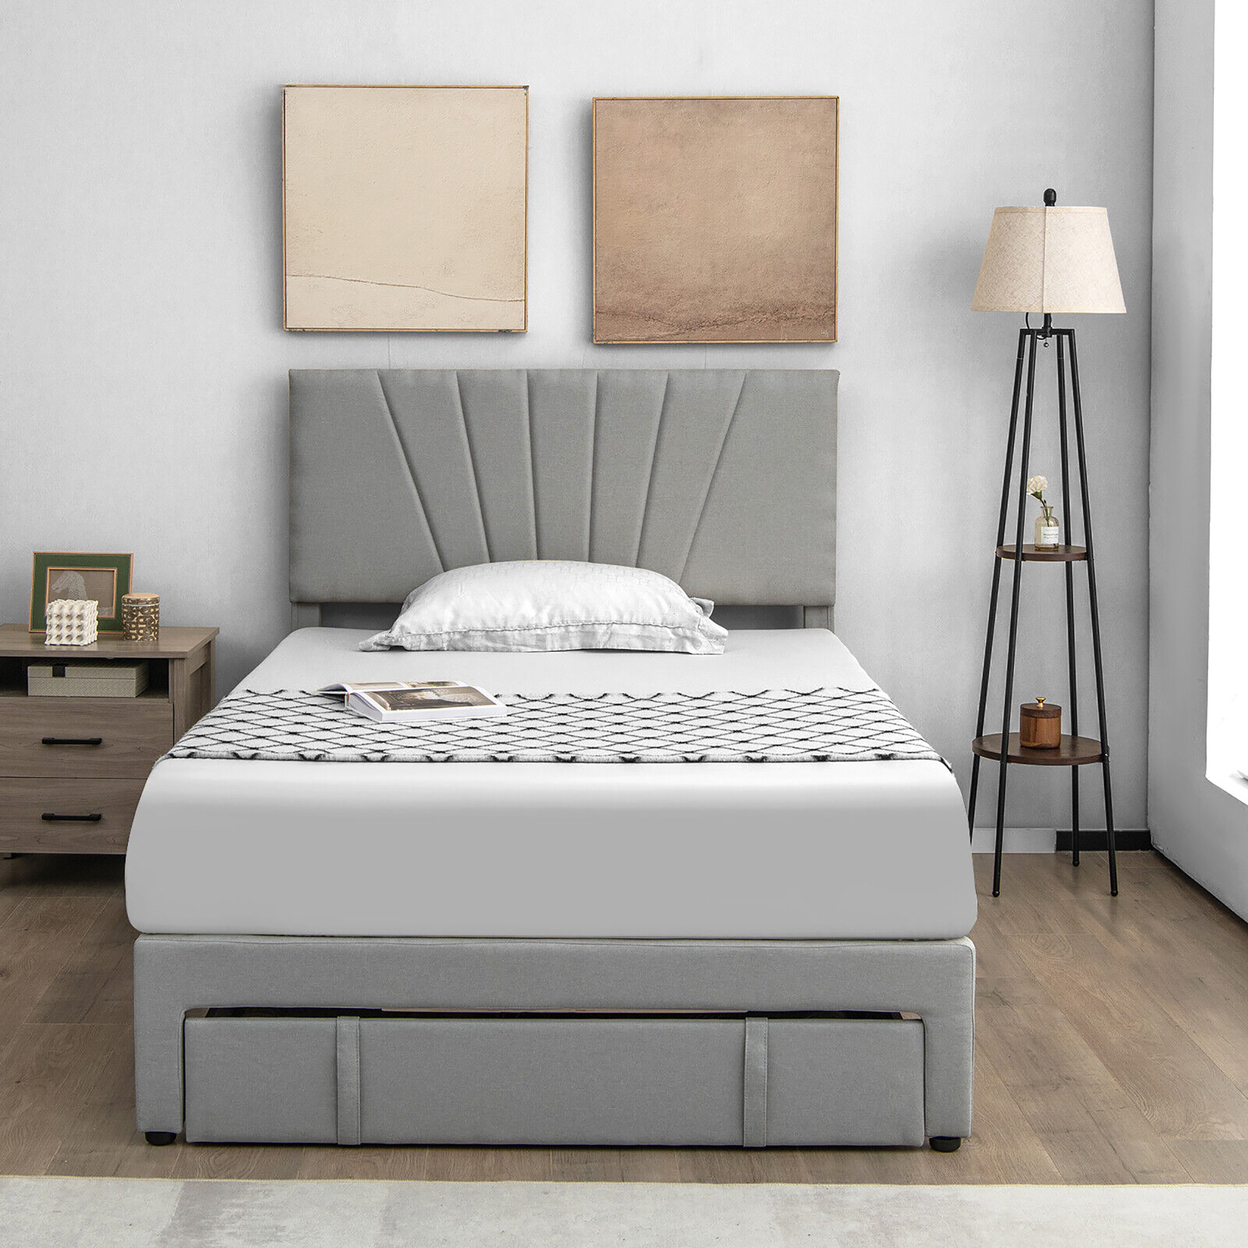 Full/Queen Upholstered Bed Frame Platform Bed With Drawer & Adjustable Headboard Grey - Queen